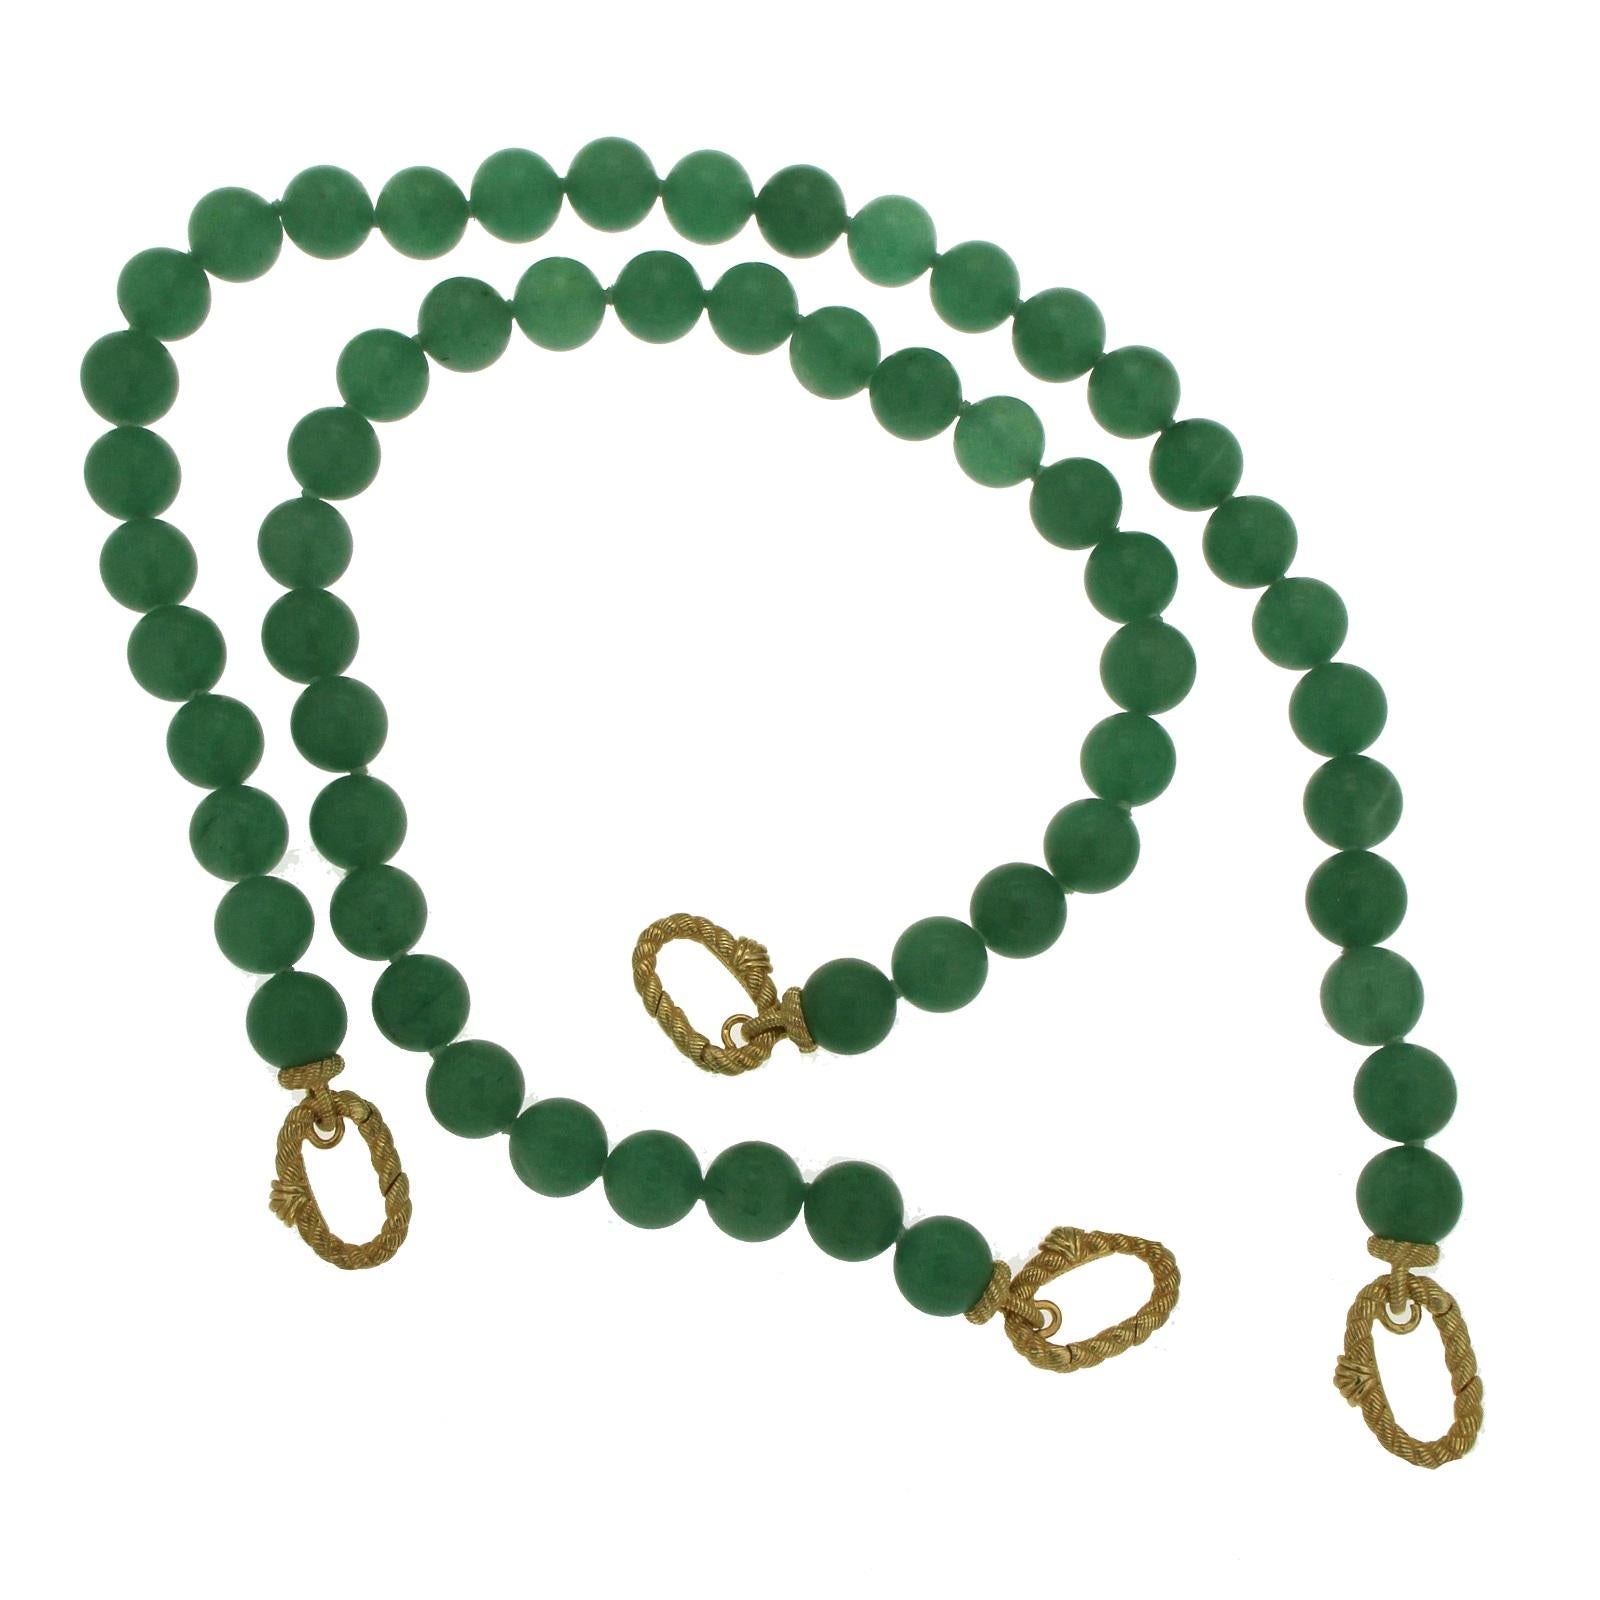 Type: Bracelet Necklace
Wearable Length: 27